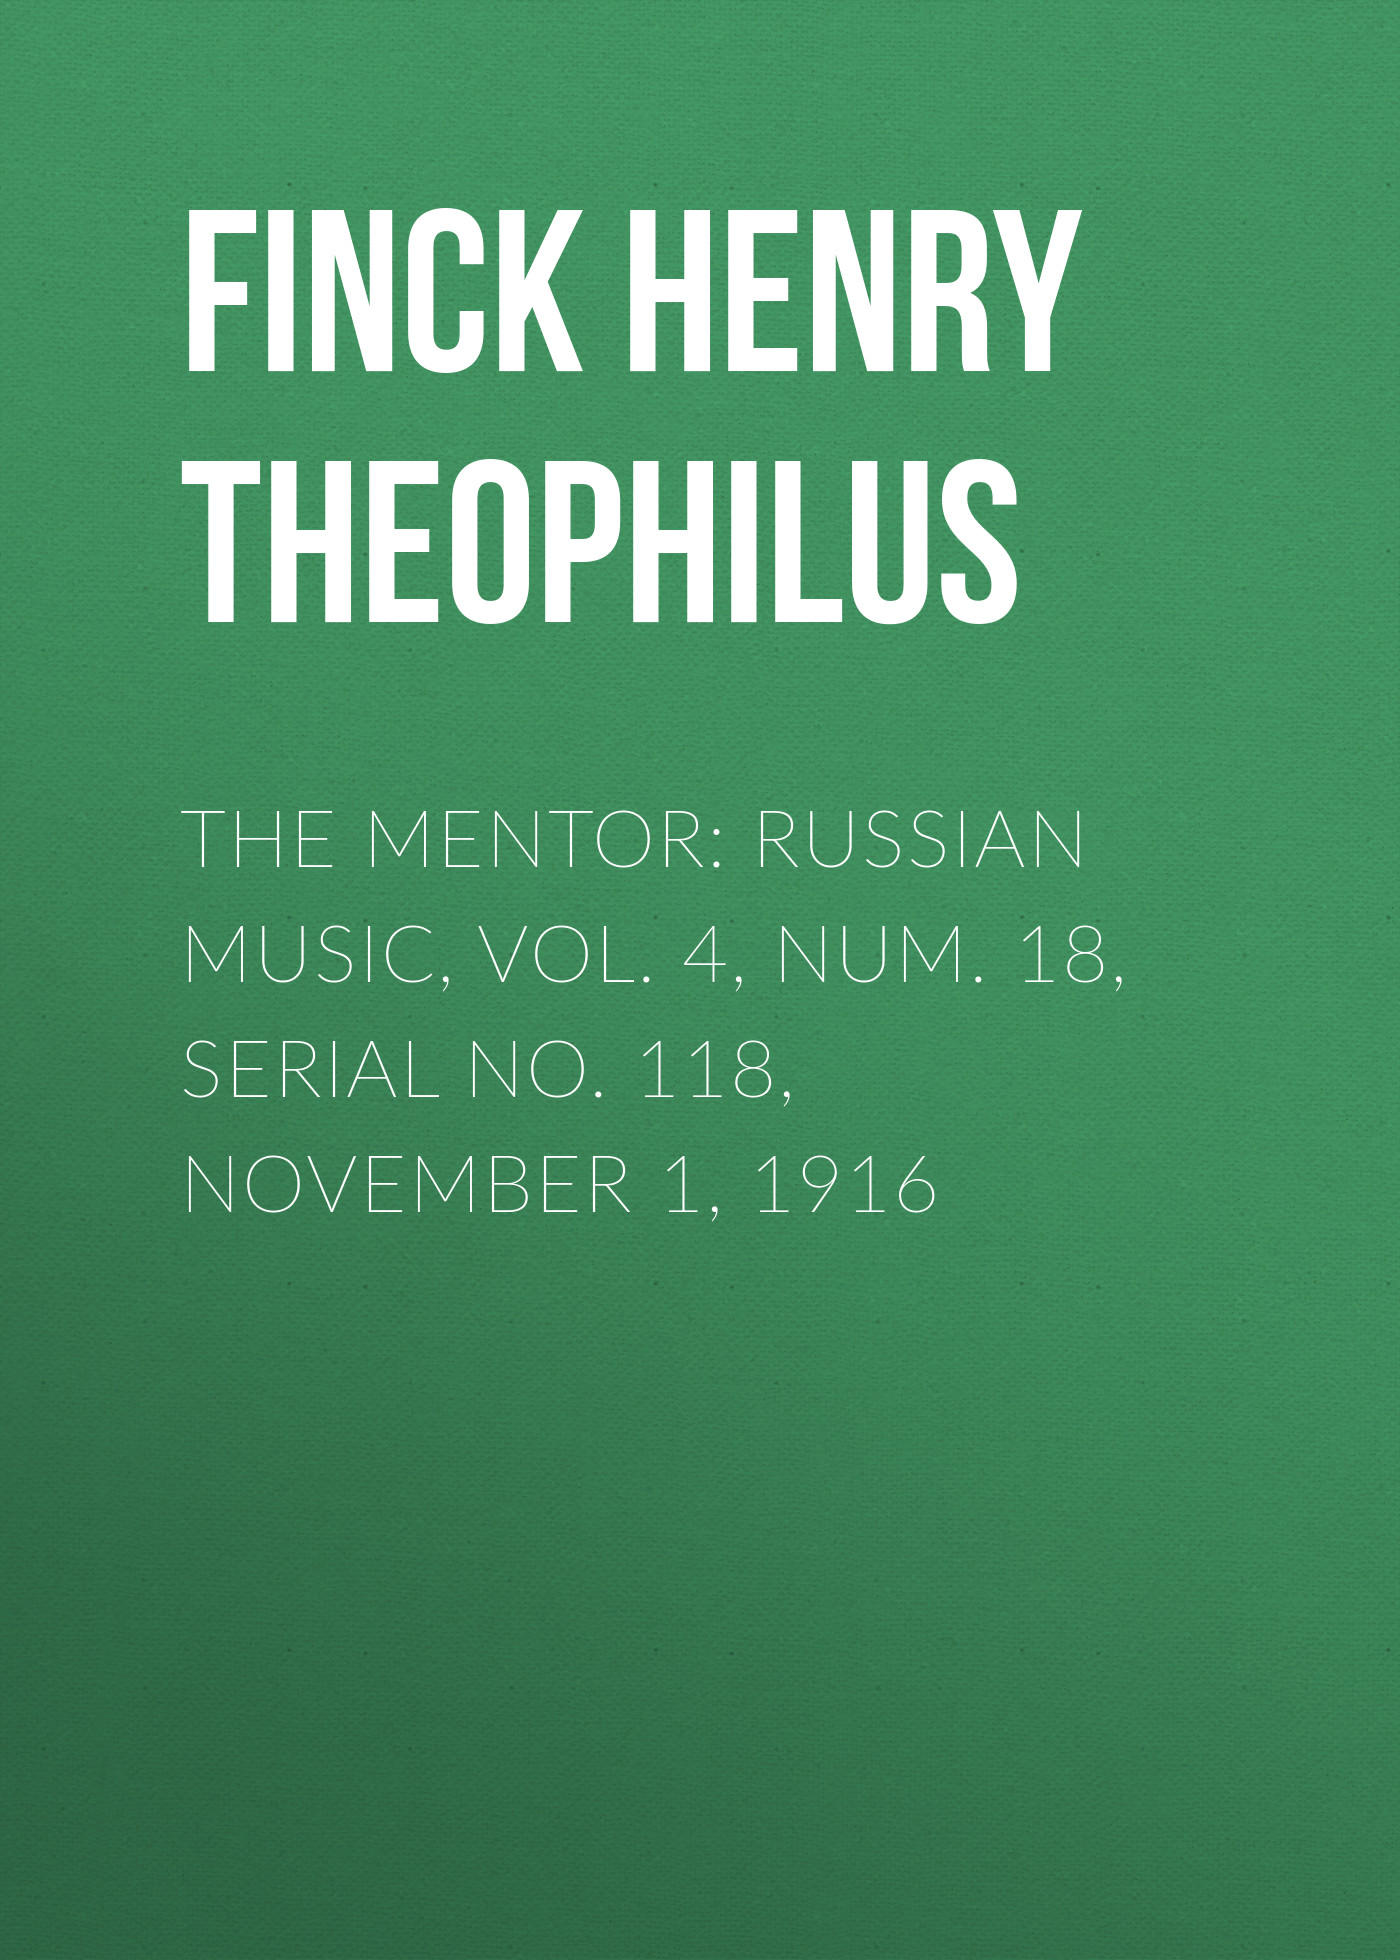 The Mentor: Russian Music, Vol. 4, Num. 18, Serial No. 118, November 1, 1916